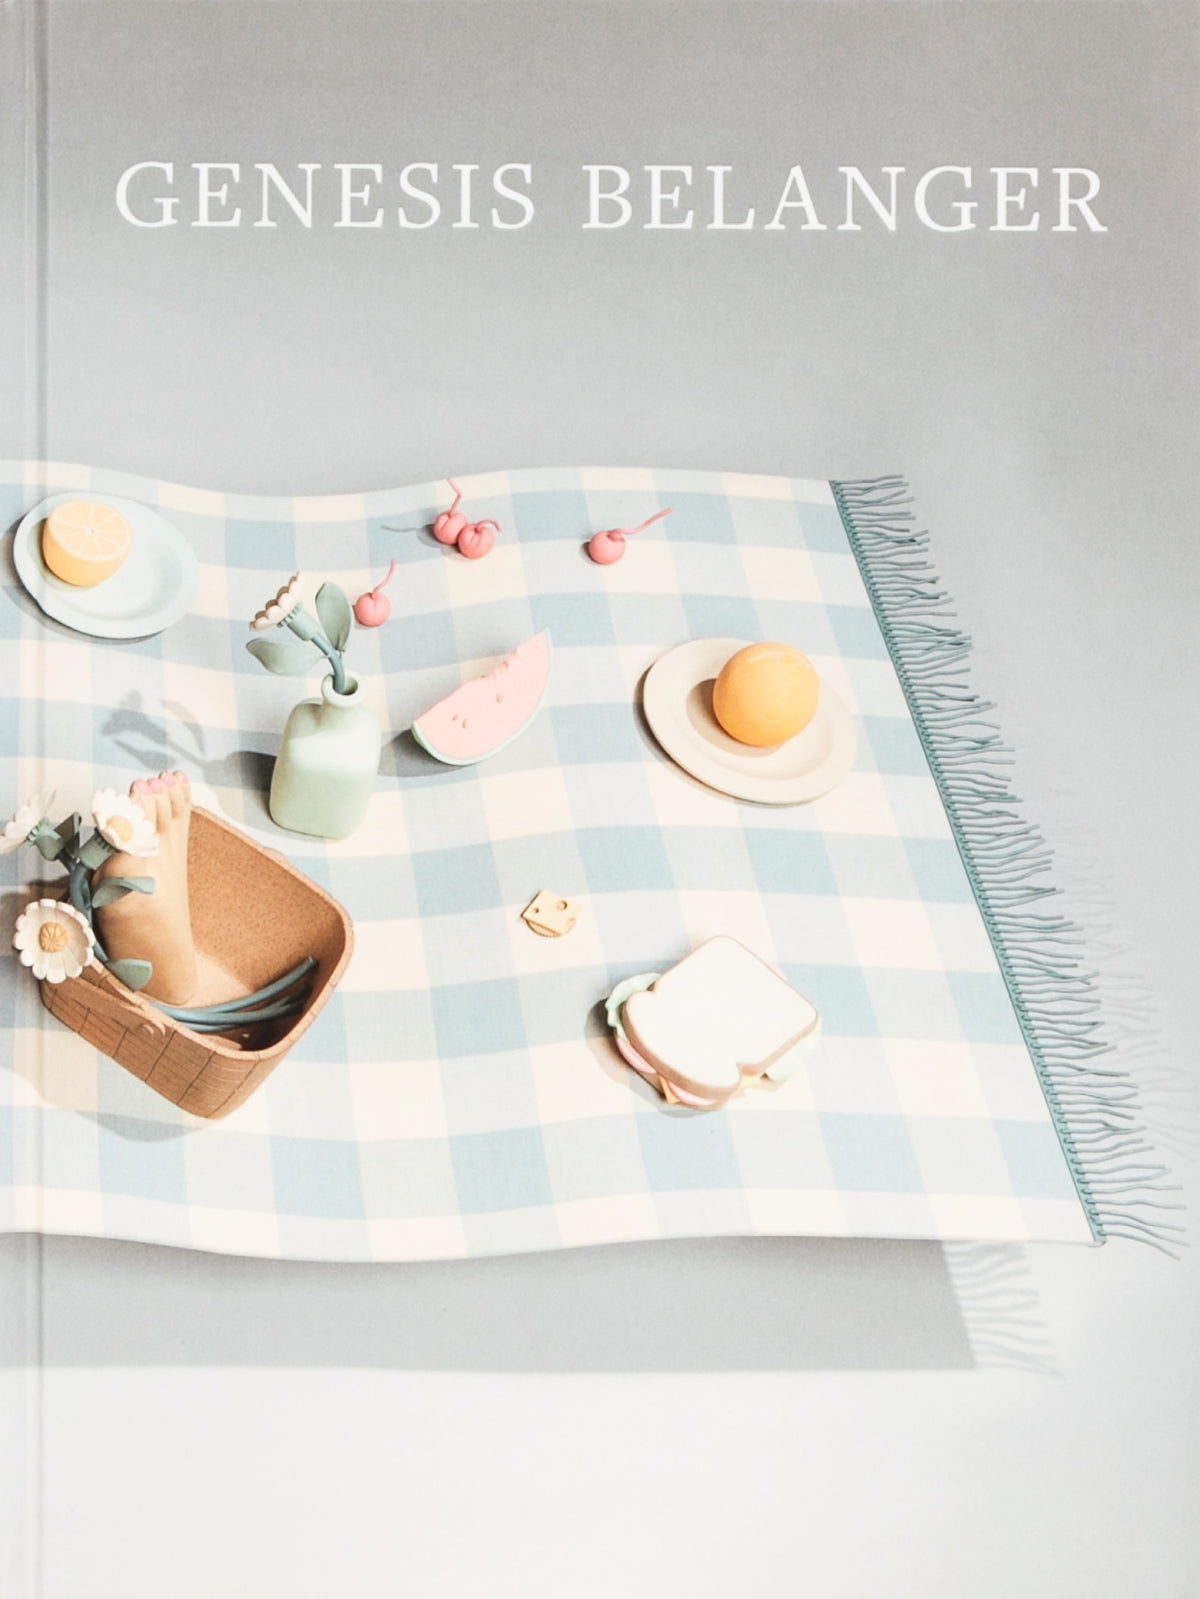 Genesis Belanger